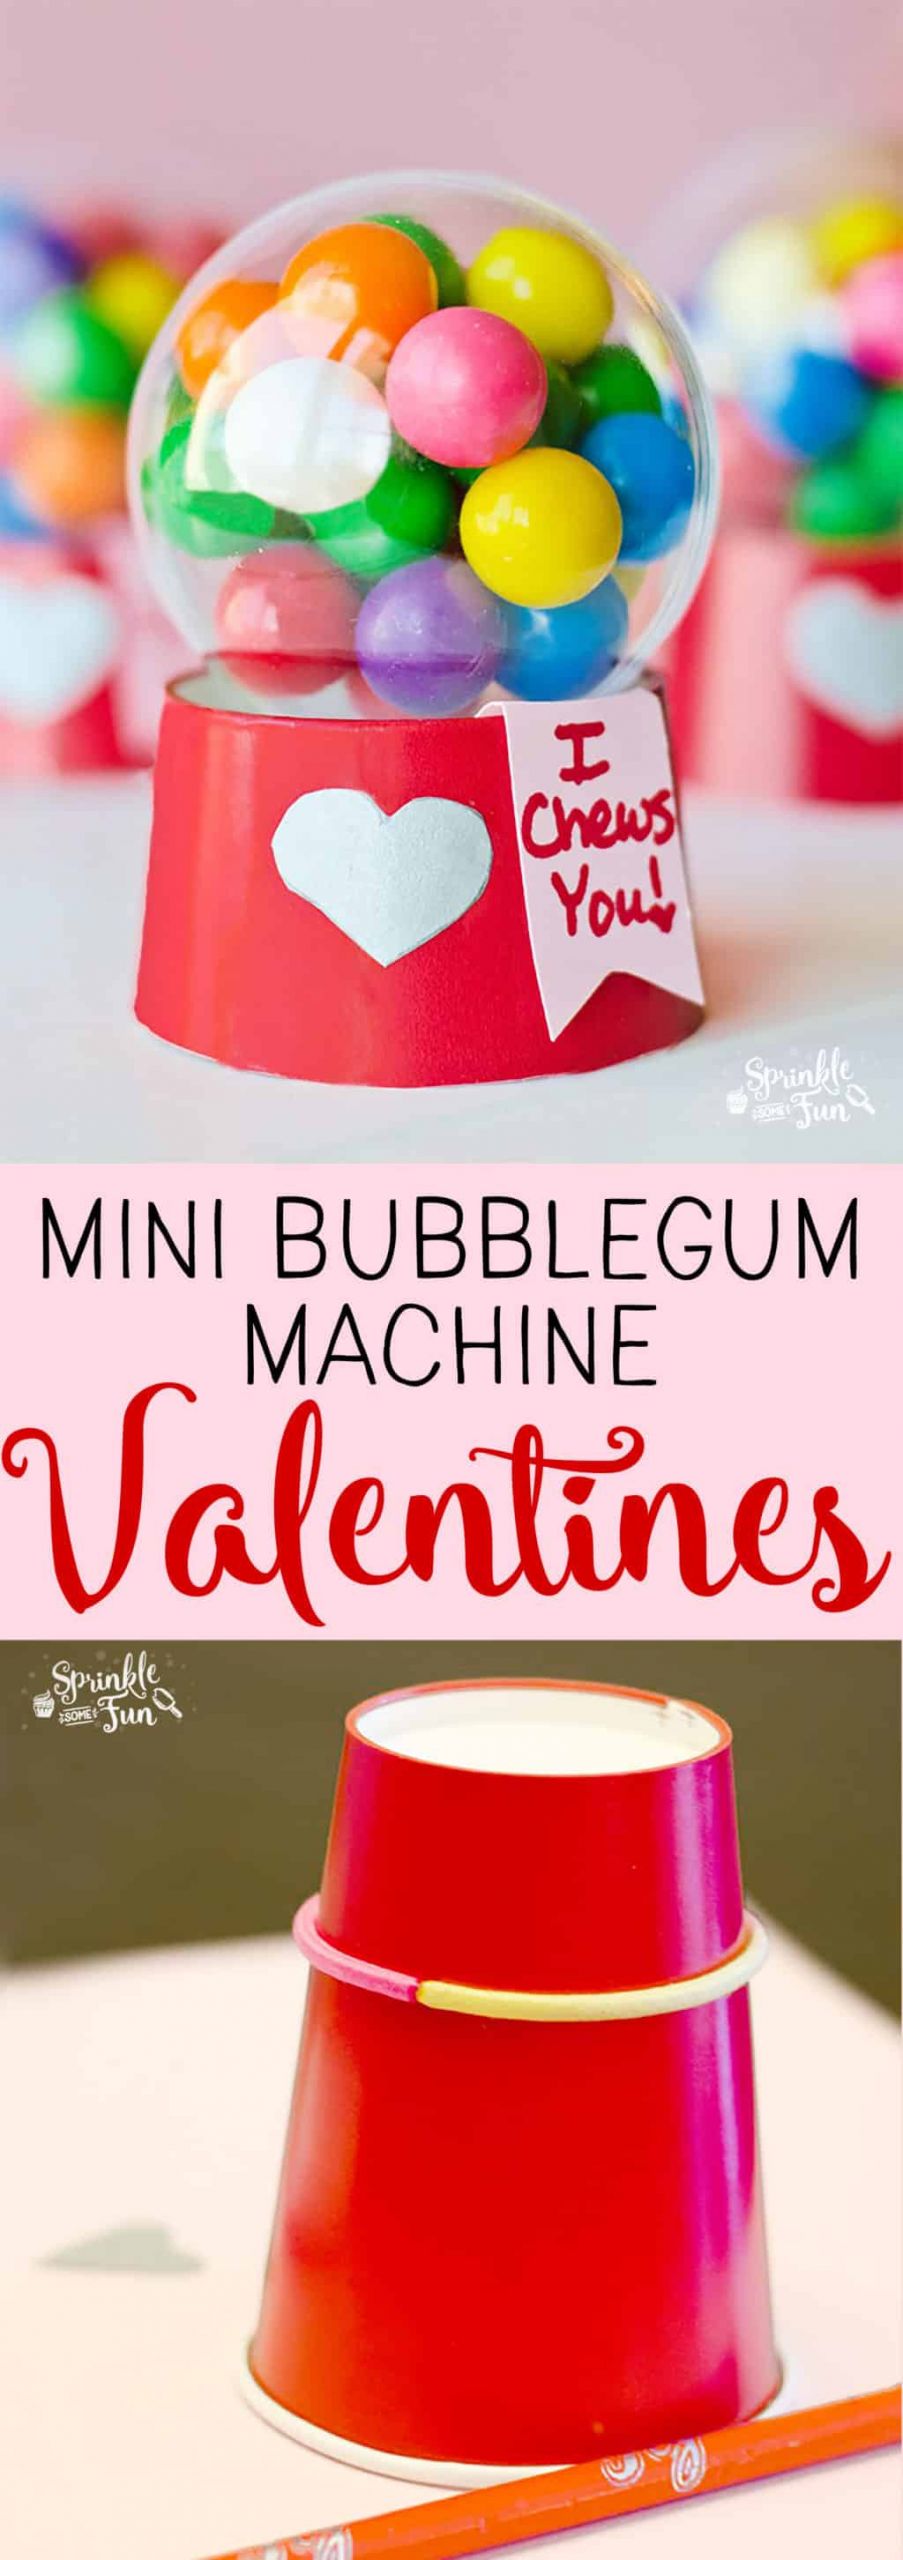 Valentine Gift Ideas For College Students
 Mini Bubblegum Machine Valentines